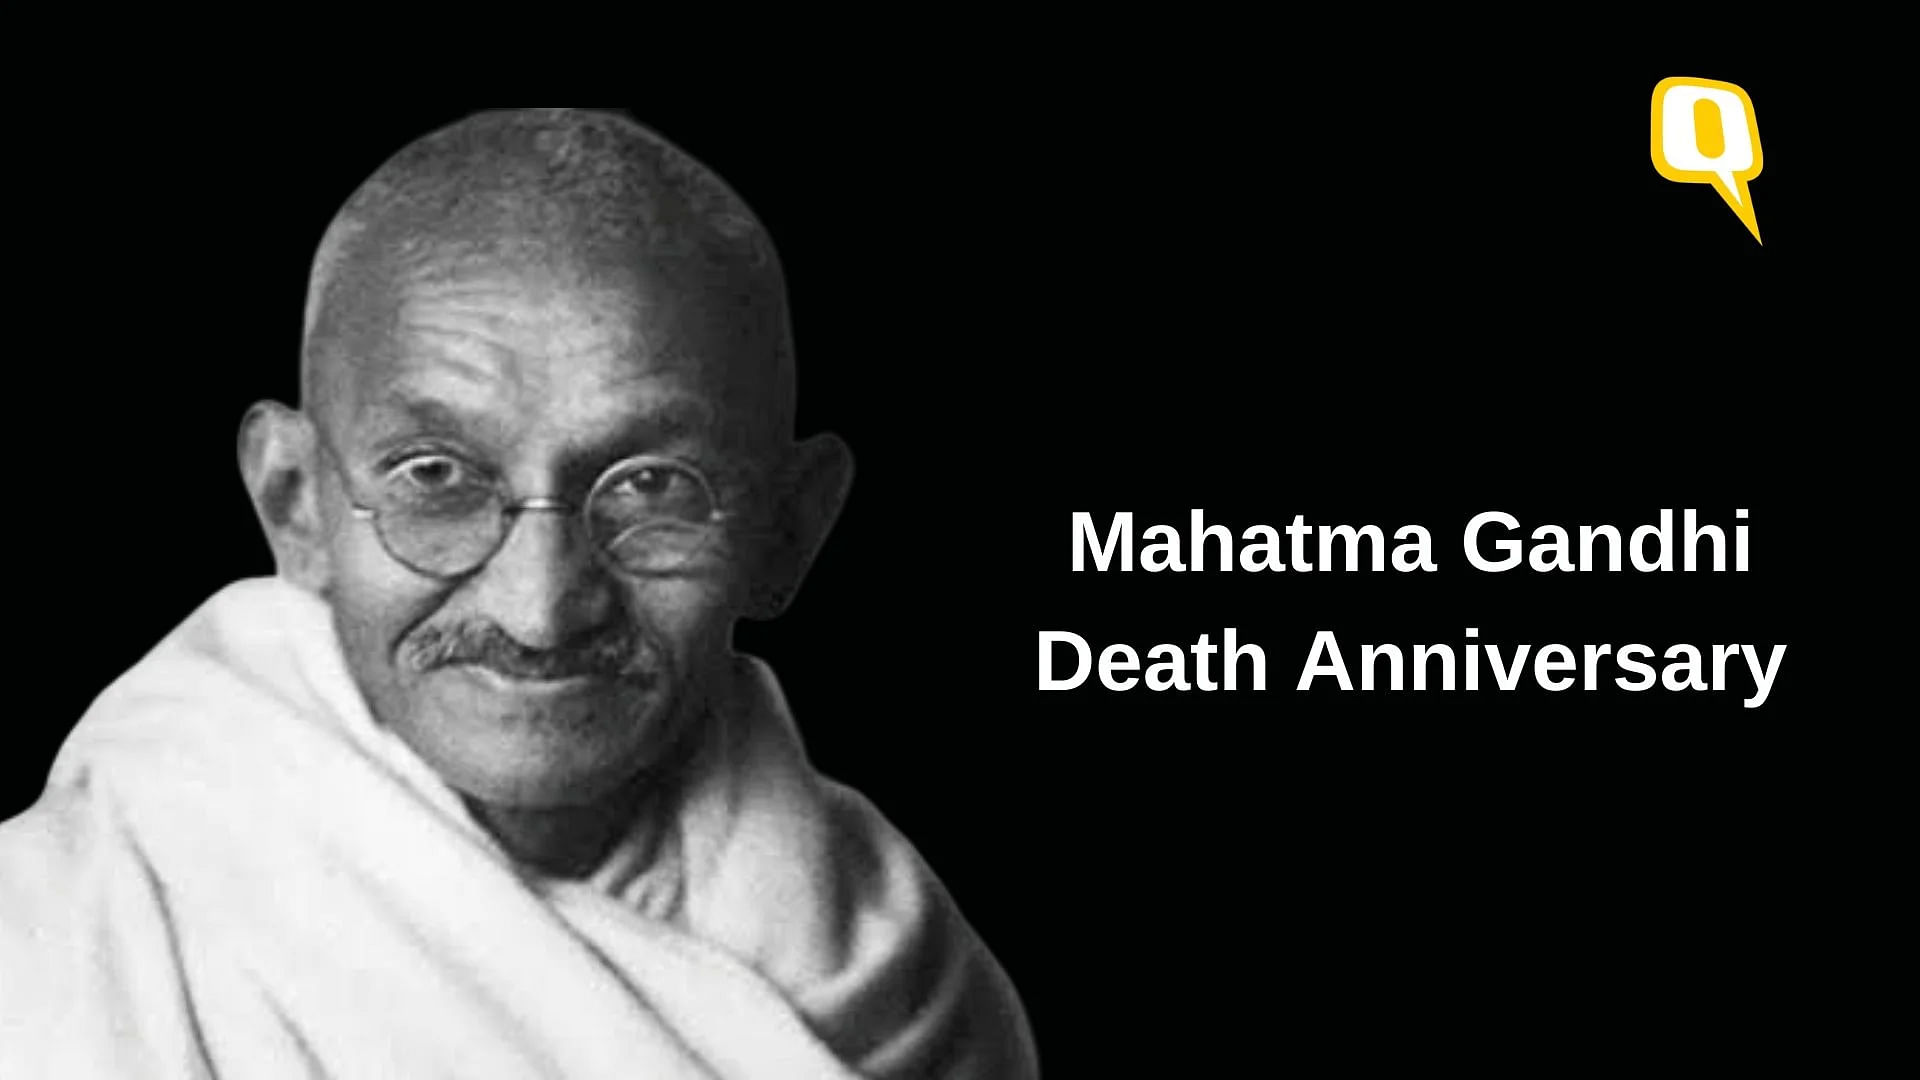 Mahatma Gandhi Death Anniversary 2020